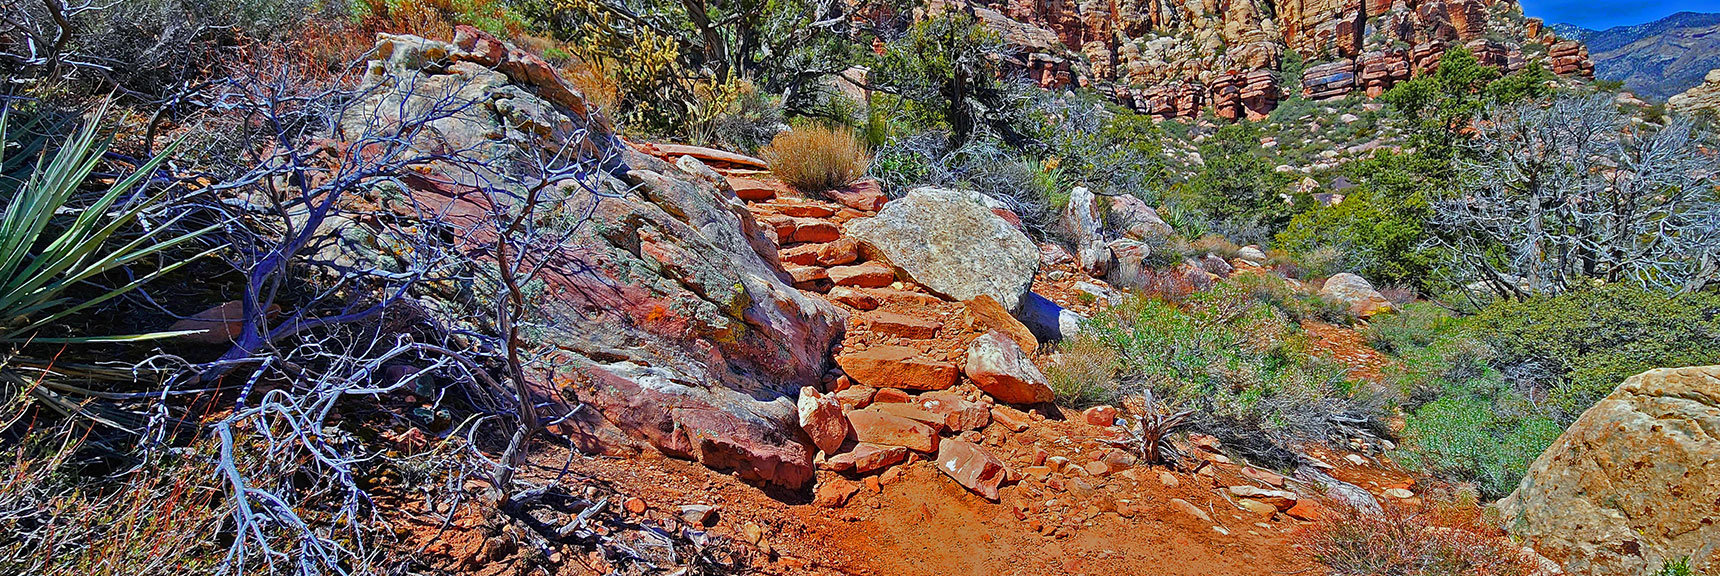 Colorful Artistic Sandstone Stairways Make Light Elevation Changes Even Easier | SMYC Trail | Red Rock Canyon National Conservation Area, Nevada | David Smith | LasVegasAreaTrails.com